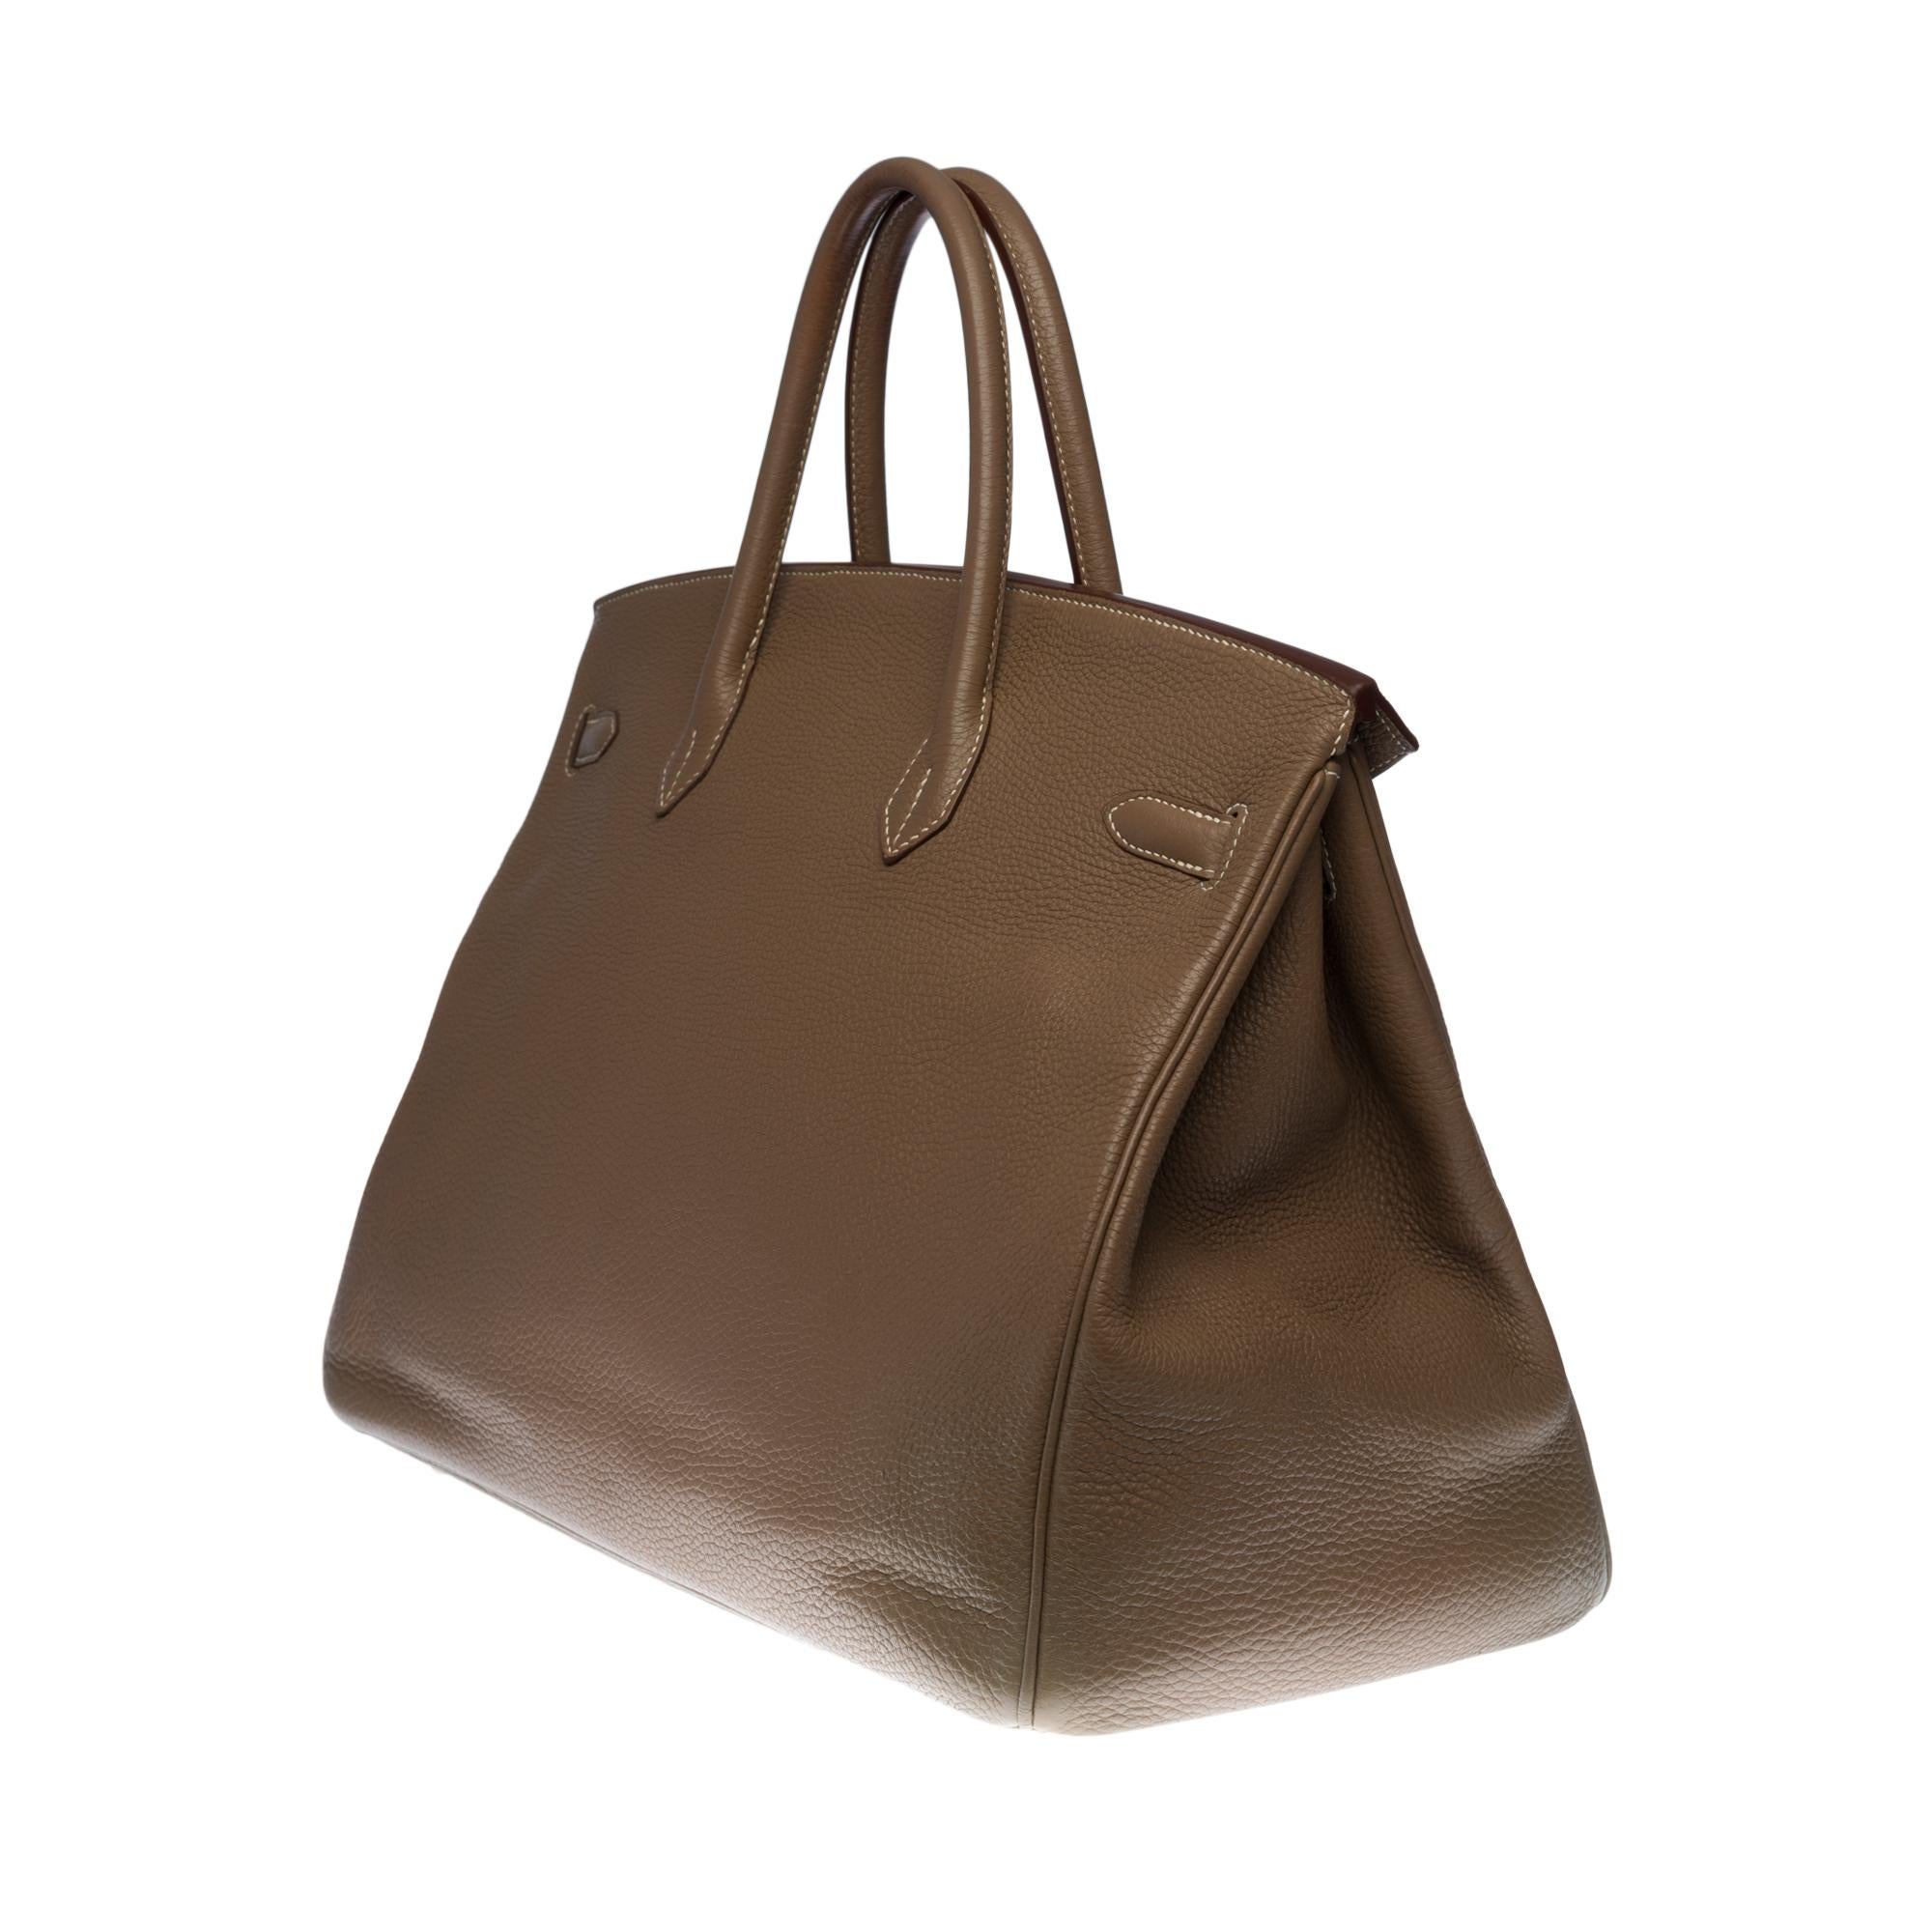 Brown Stunning Hermes Birkin 40cm handbag in Etoupe Togo leather, SHW